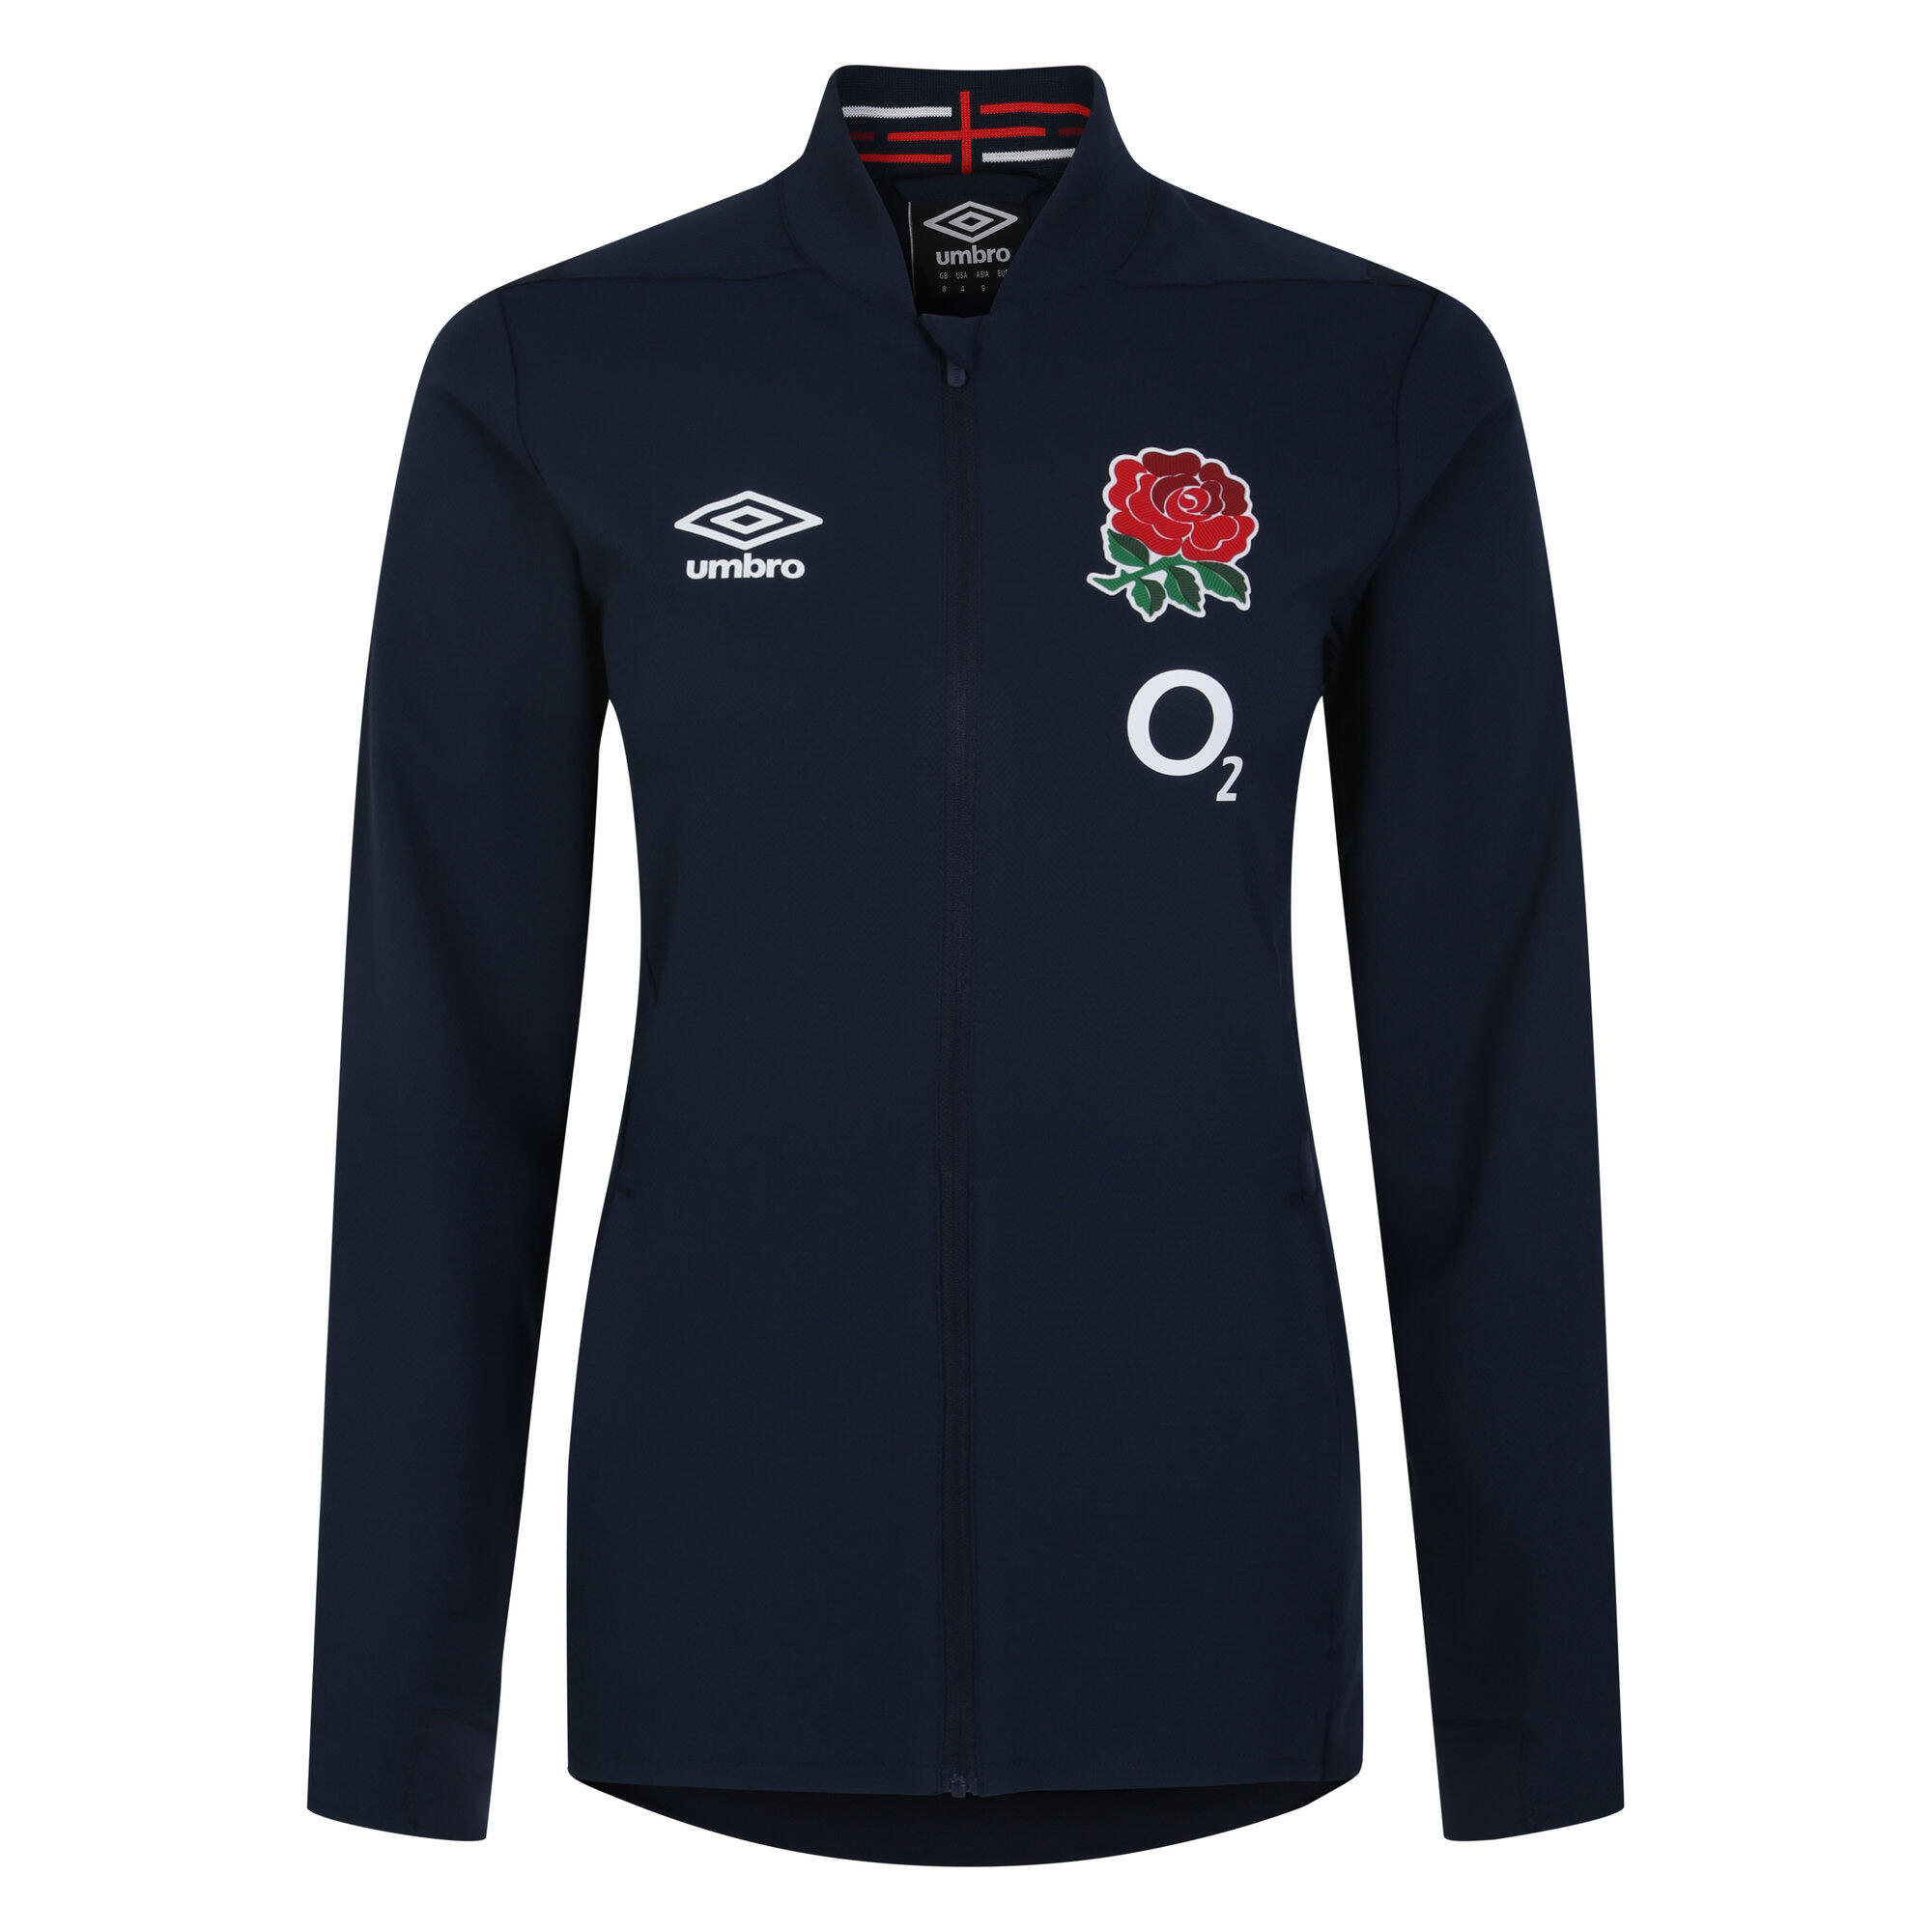 UMBRO Womens/Ladies 23/24 England Rugby Anthem Jacket (Navy Blazer)